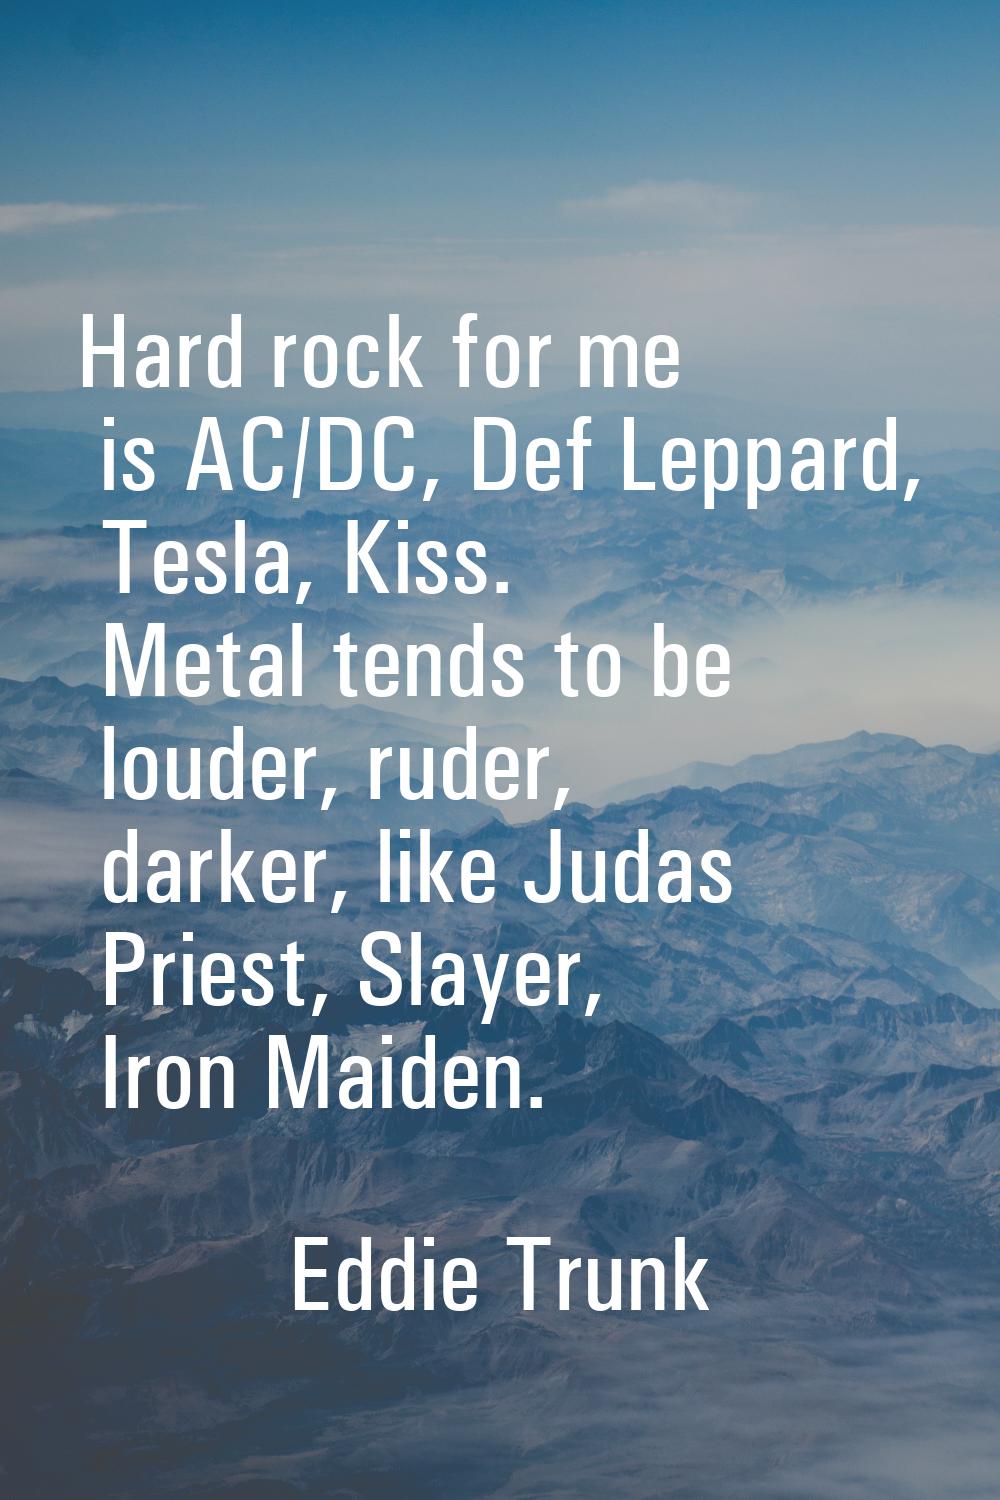 Hard rock for me is AC/DC, Def Leppard, Tesla, Kiss. Metal tends to be louder, ruder, darker, like 